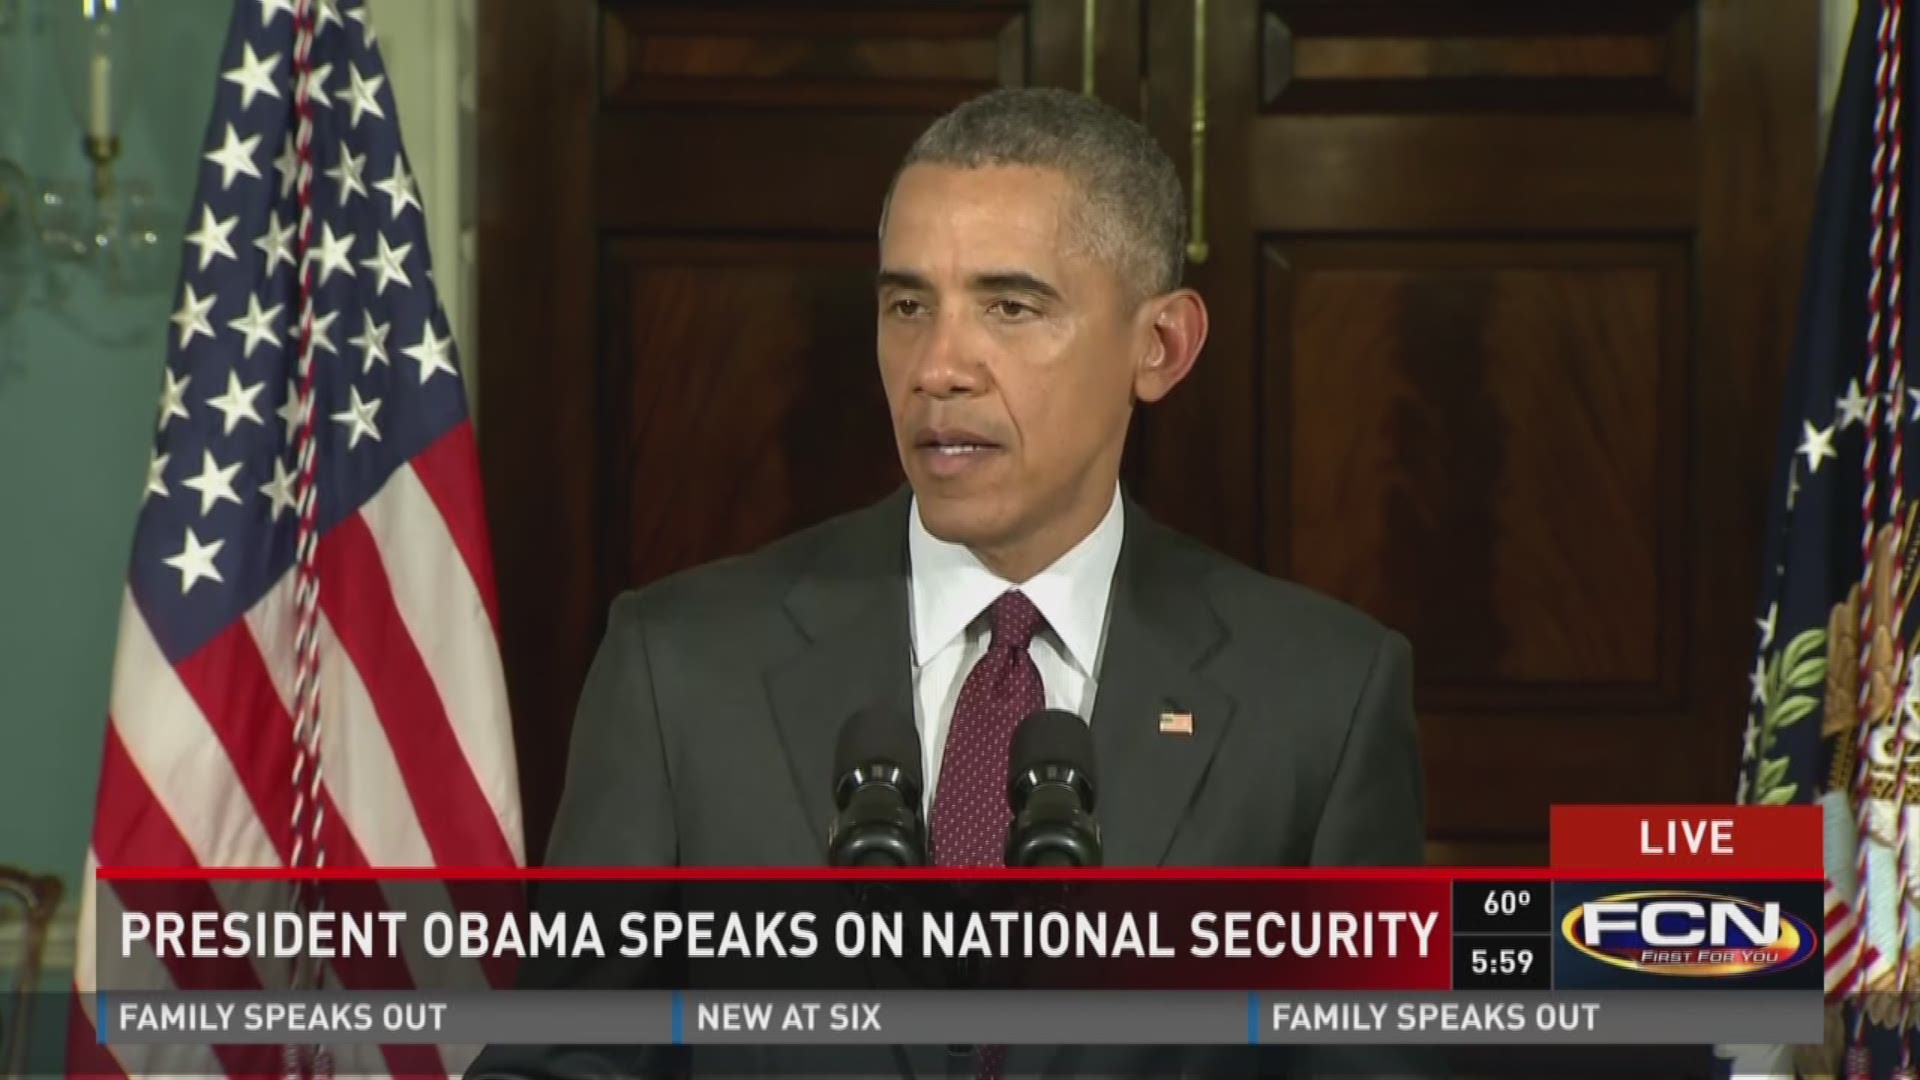 President Obama speaks on national security